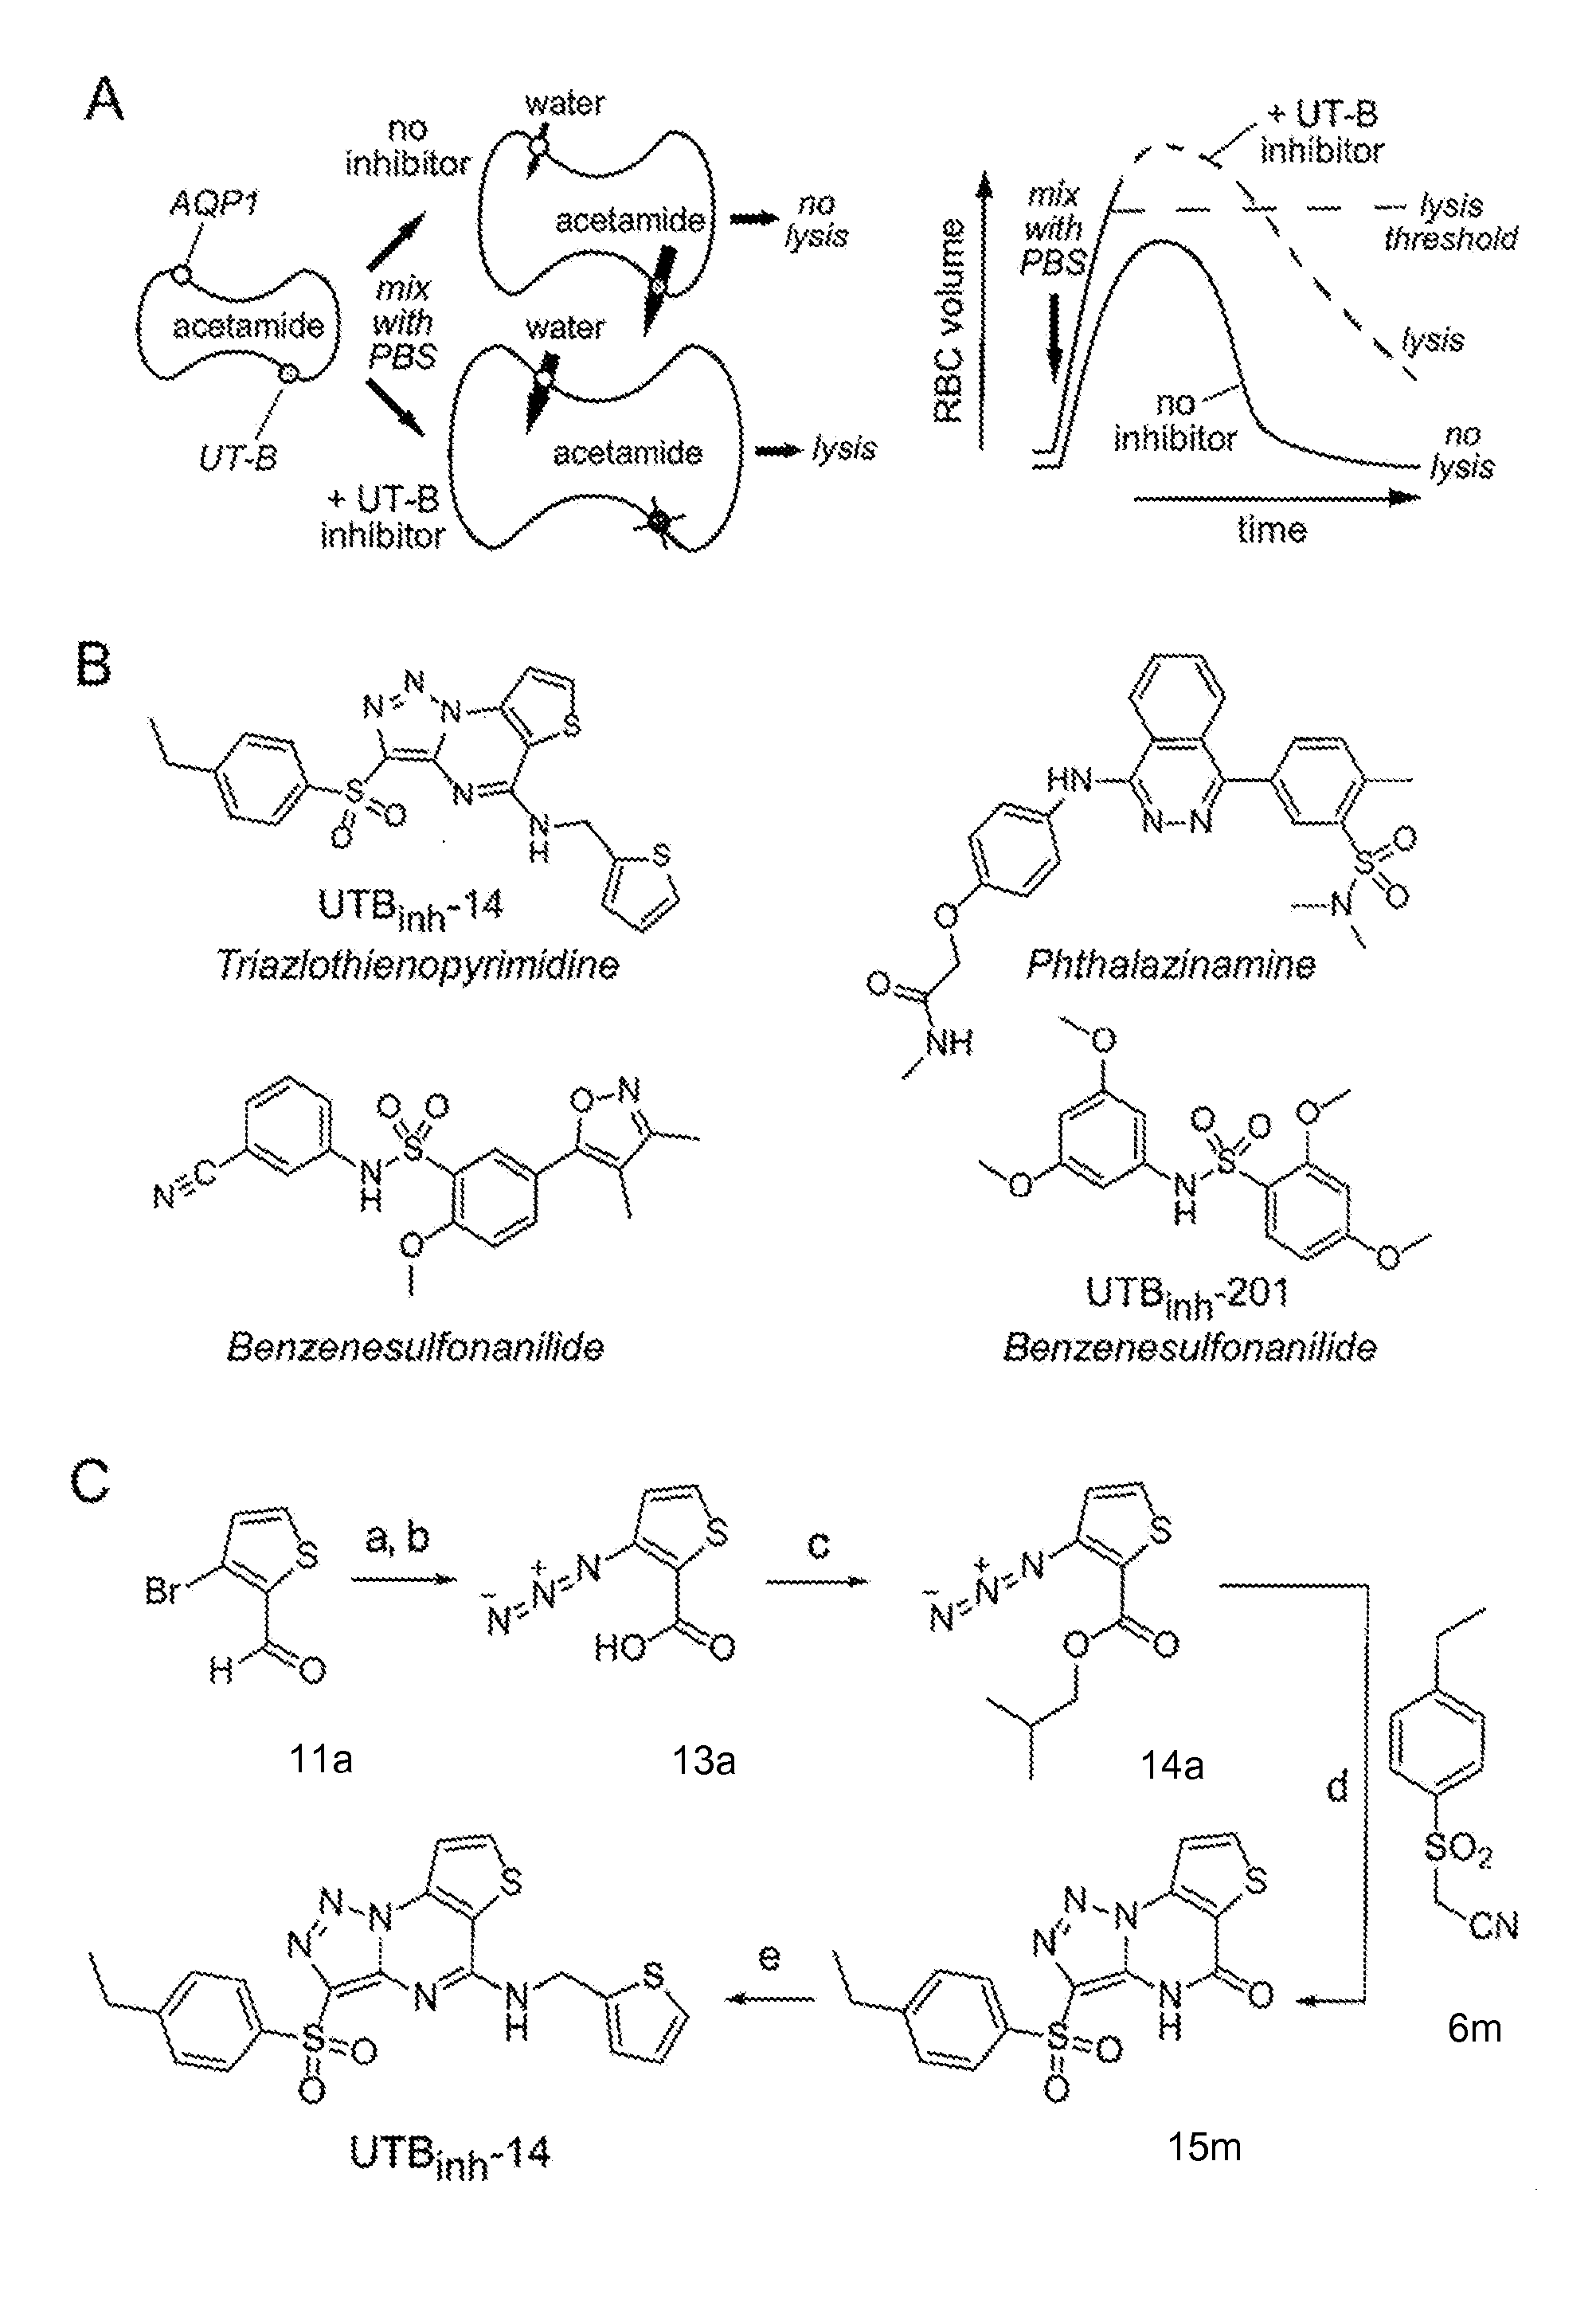 Triazolothienopyrimidine compound inhibitors of urea transporters and methods of using inhibitors